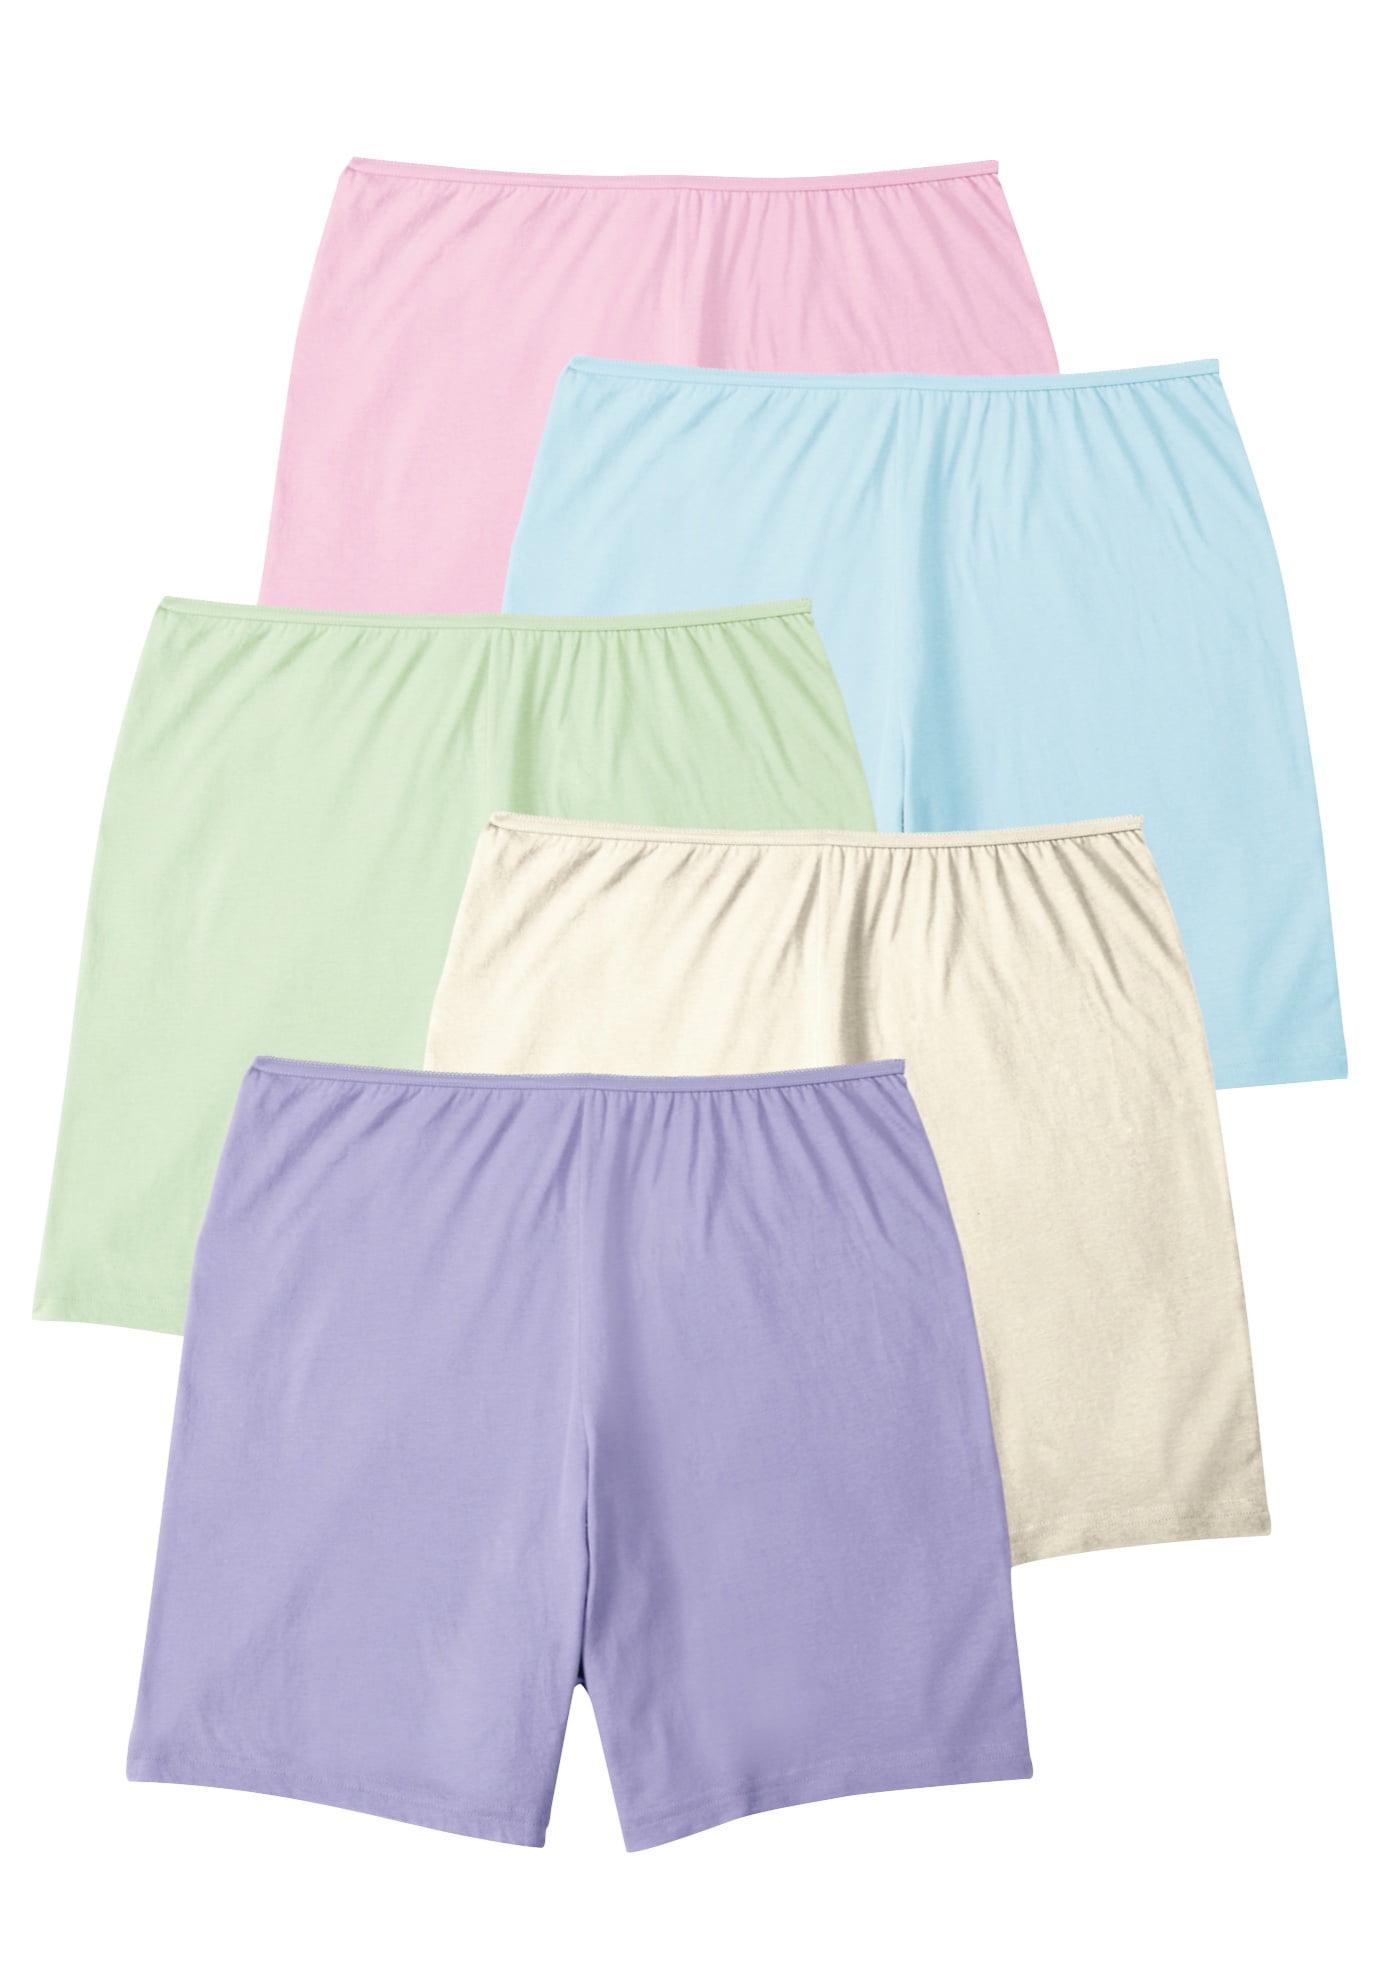 Comfort Choice Women's Plus Size Stretch Cotton Brief 5-Pack